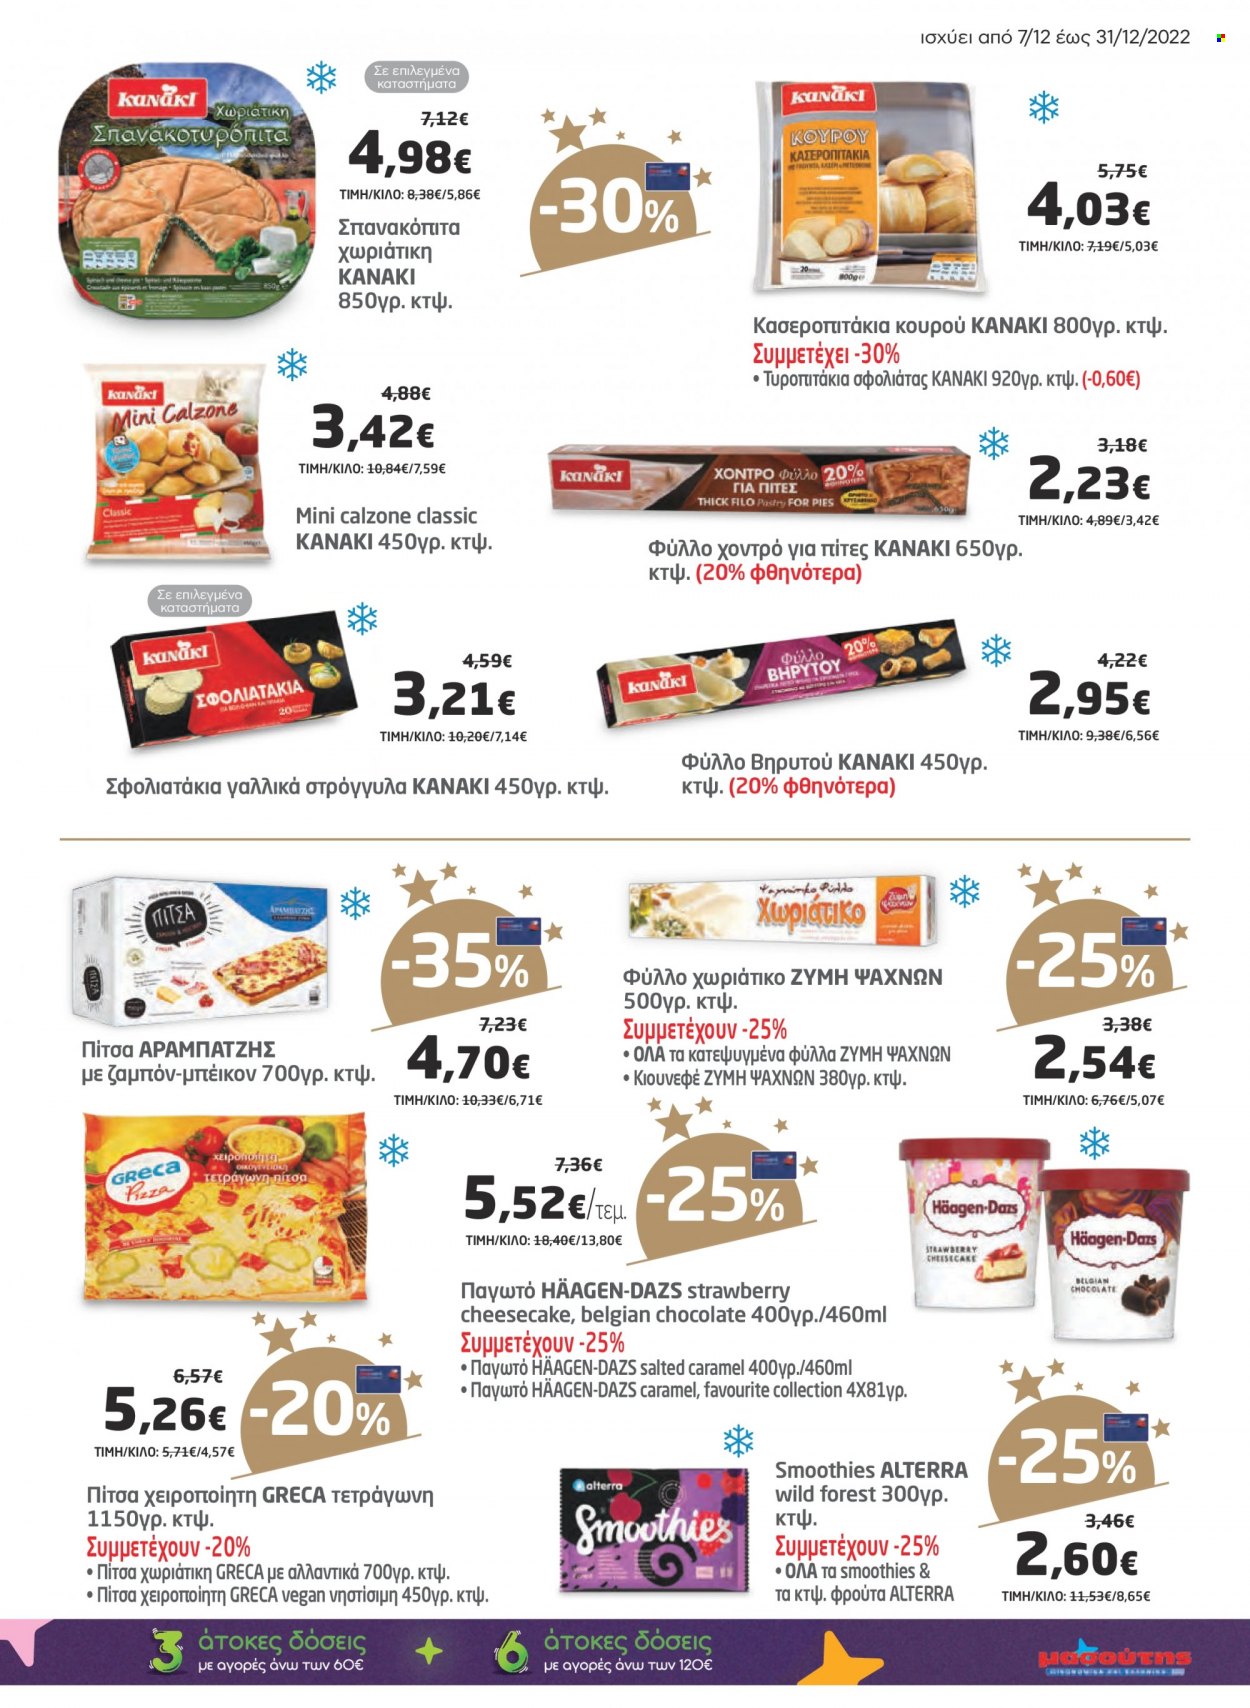 thumbnail - Φυλλάδια Masoutis - 07.12.2022 - 31.12.2022 - Εκπτωτικά προϊόντα - ζύμη, μπέικον, παγωτό, πίτσα. Σελίδα 27.